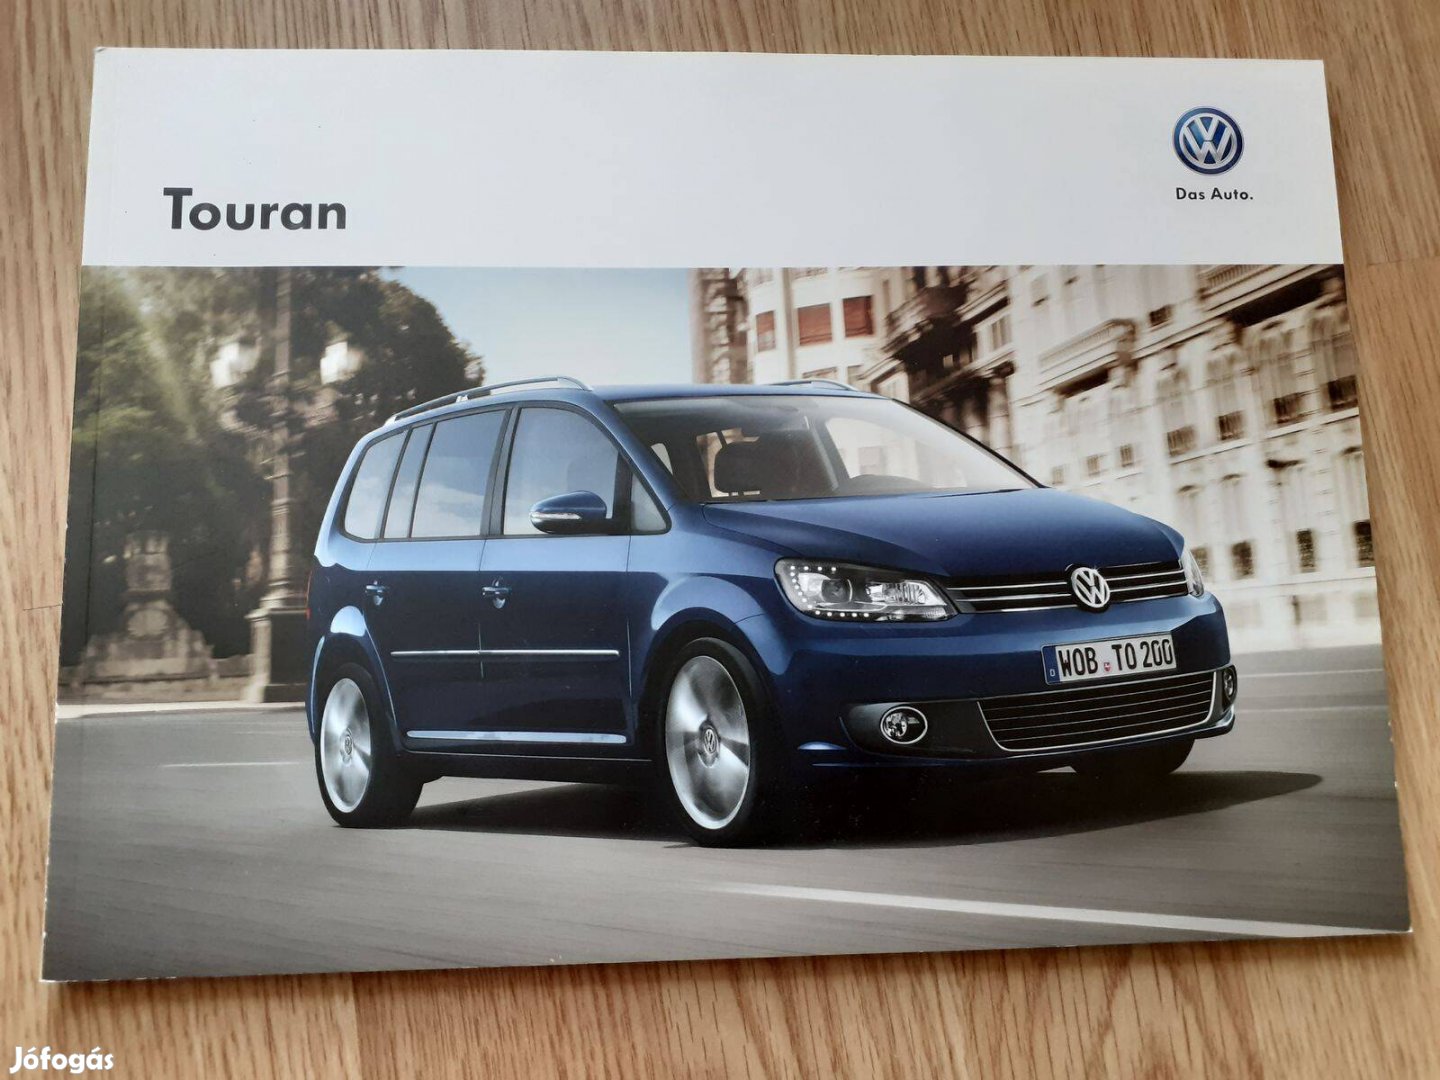 Volkswagen Touran prospektus - 2014, magyar nyelvű